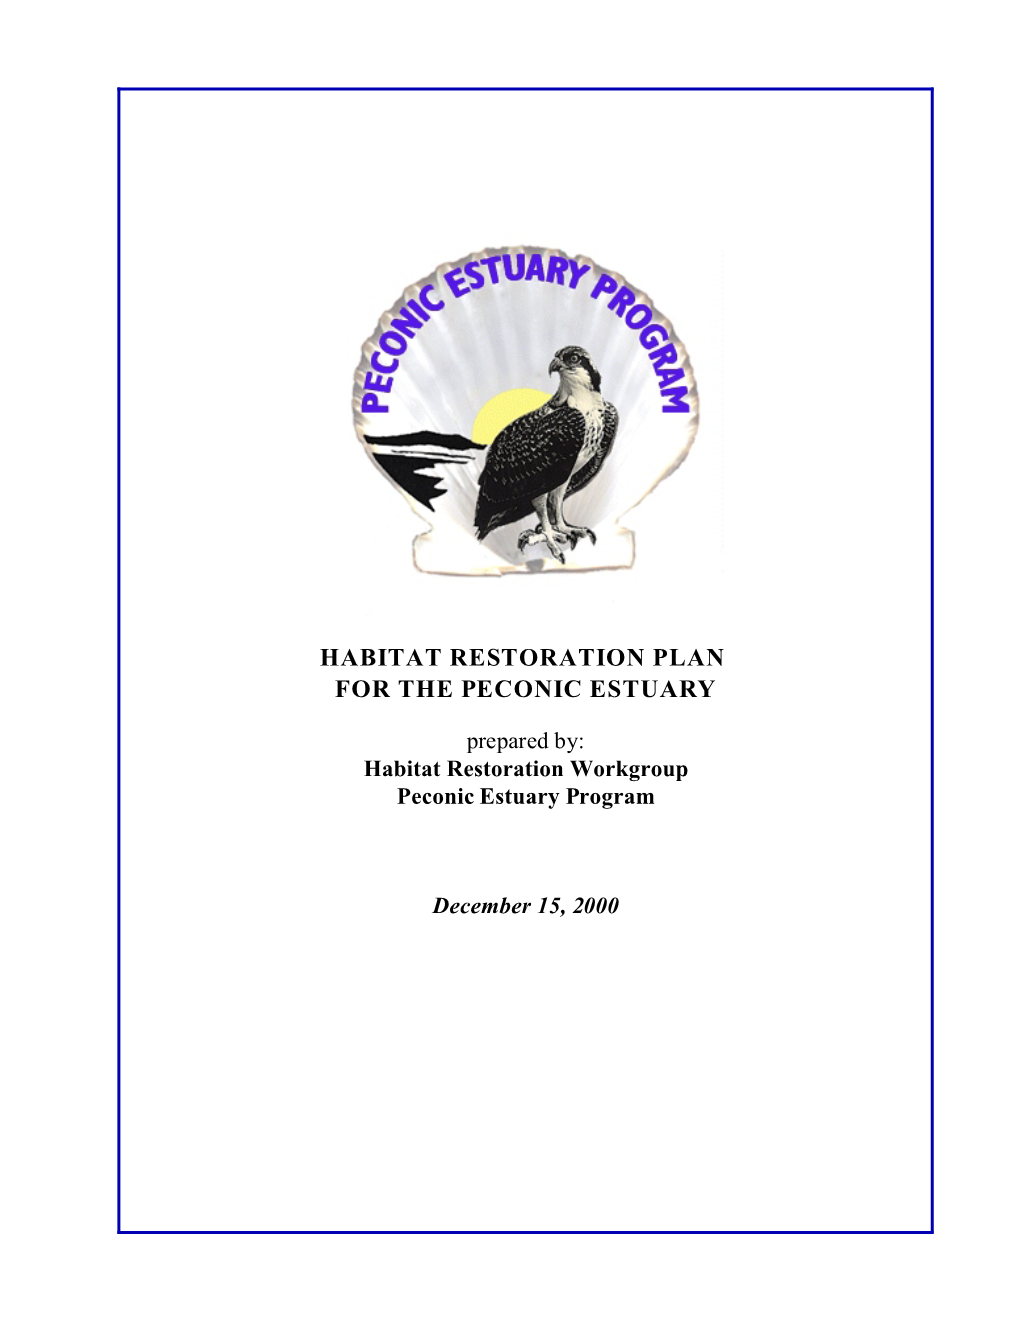 Habitat Restoration Plan for the Peconic Estuary